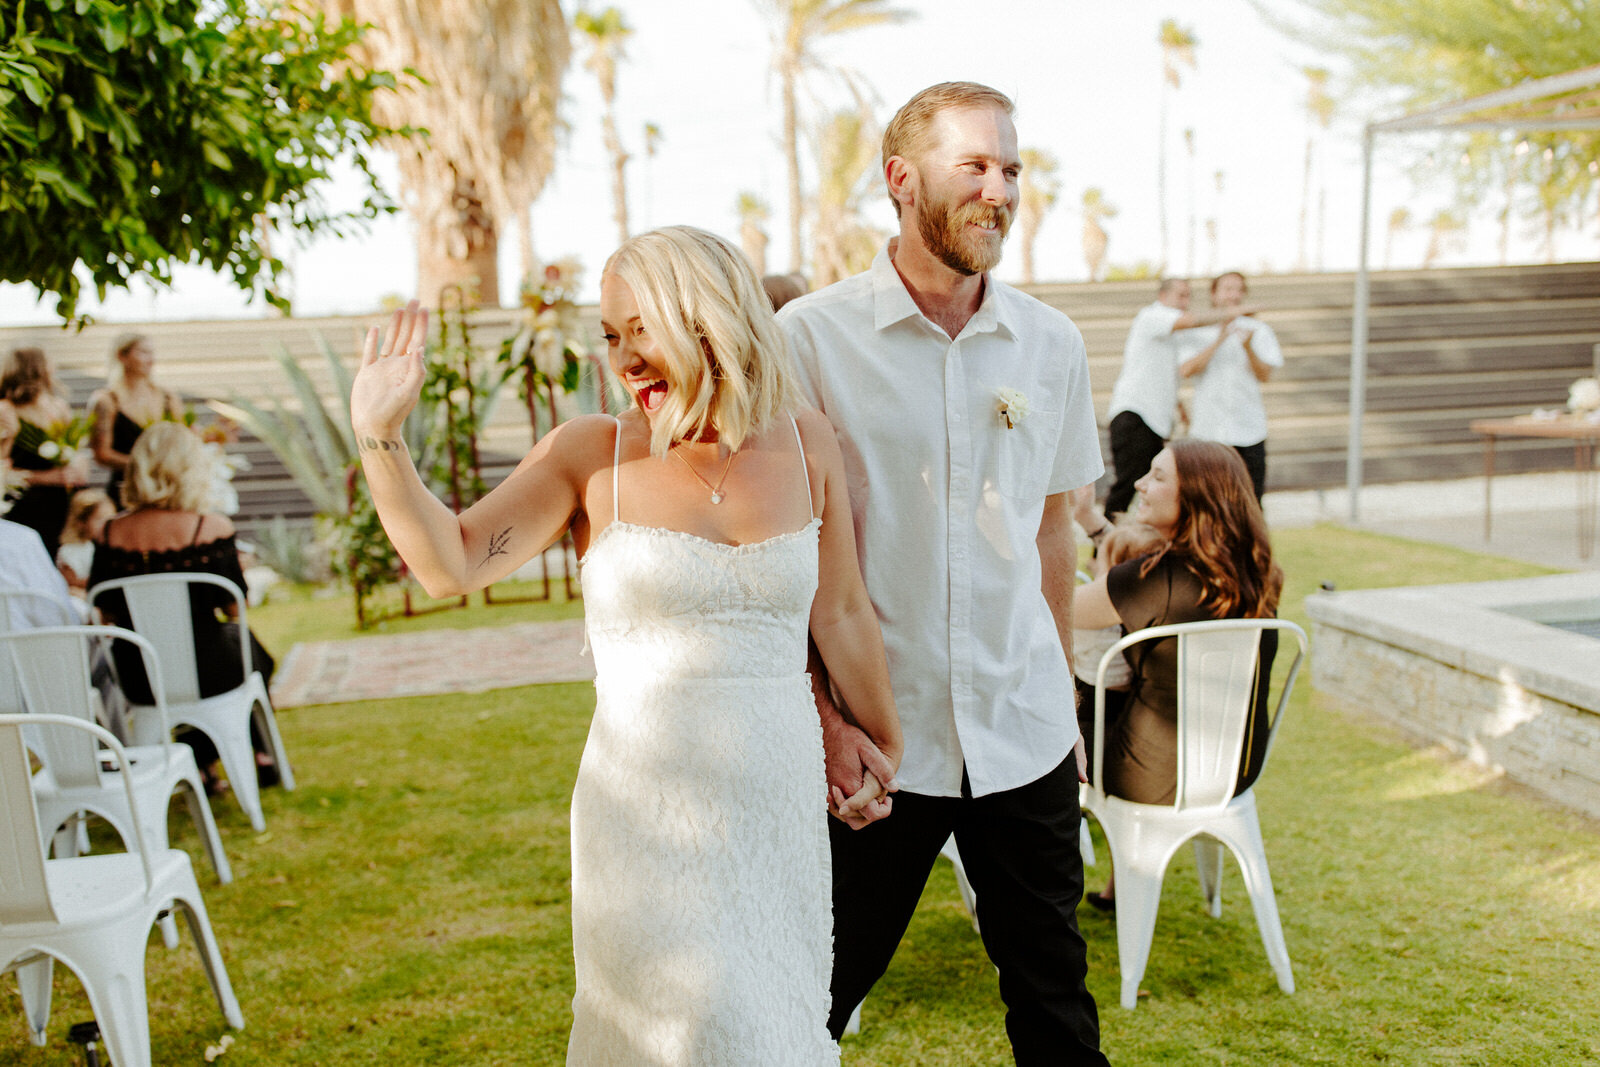 Brianna-Broyles-Photography-COVID-Backyard-Wedding-Palm-Springs-Ceremony-12.jpg